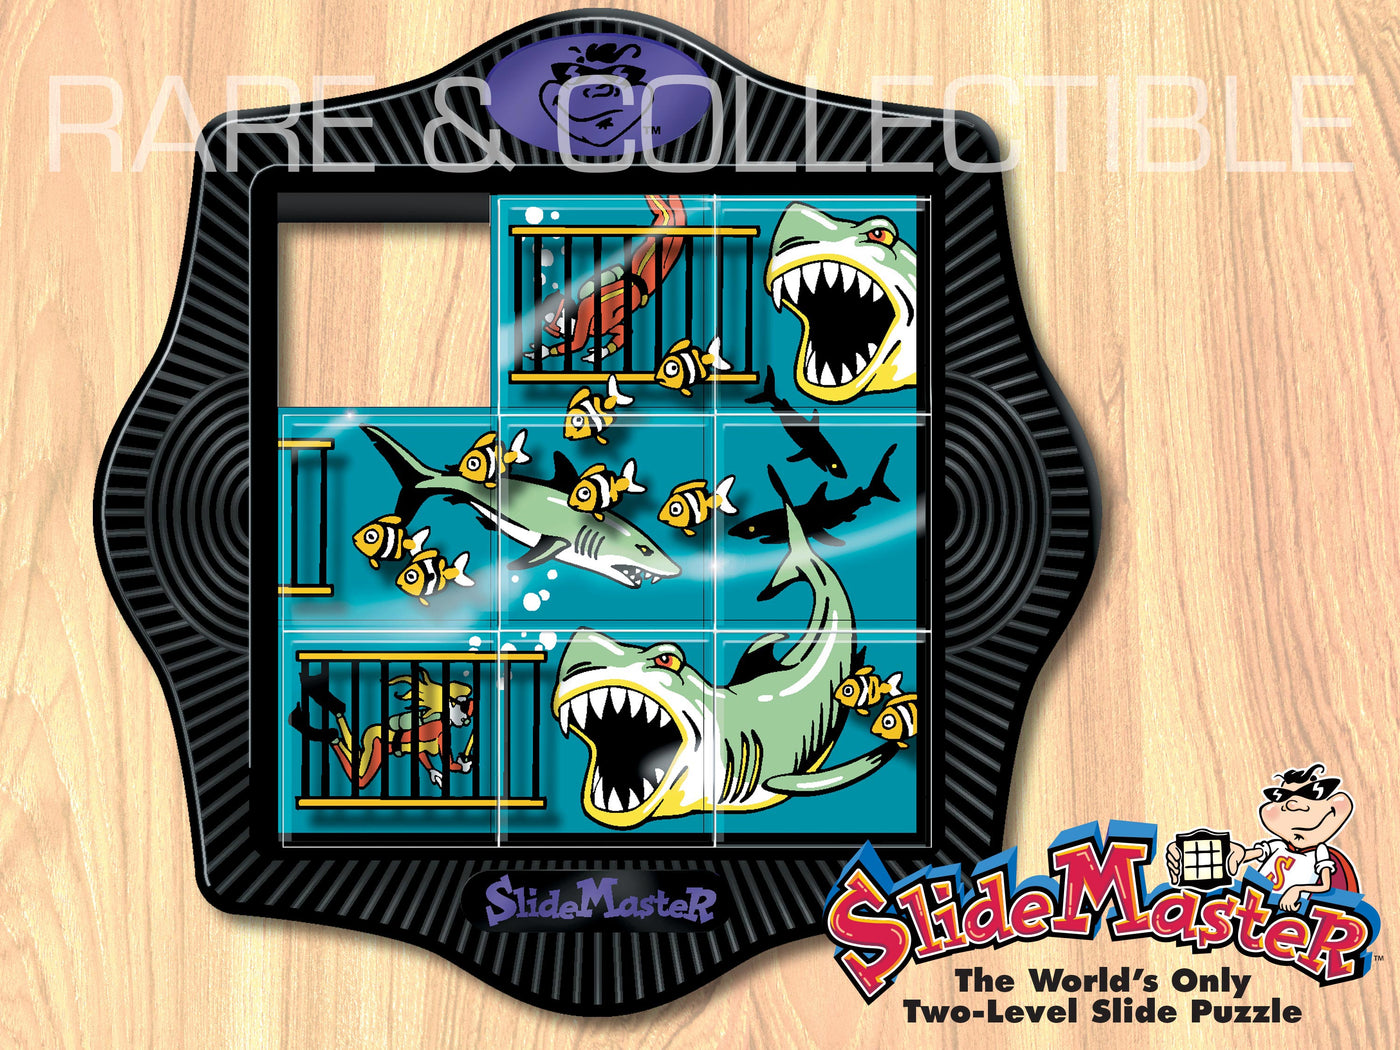 Rare and Collectible Slide Puzzle - "SlideMaster - Shark Attack" - by Dan Gilbert